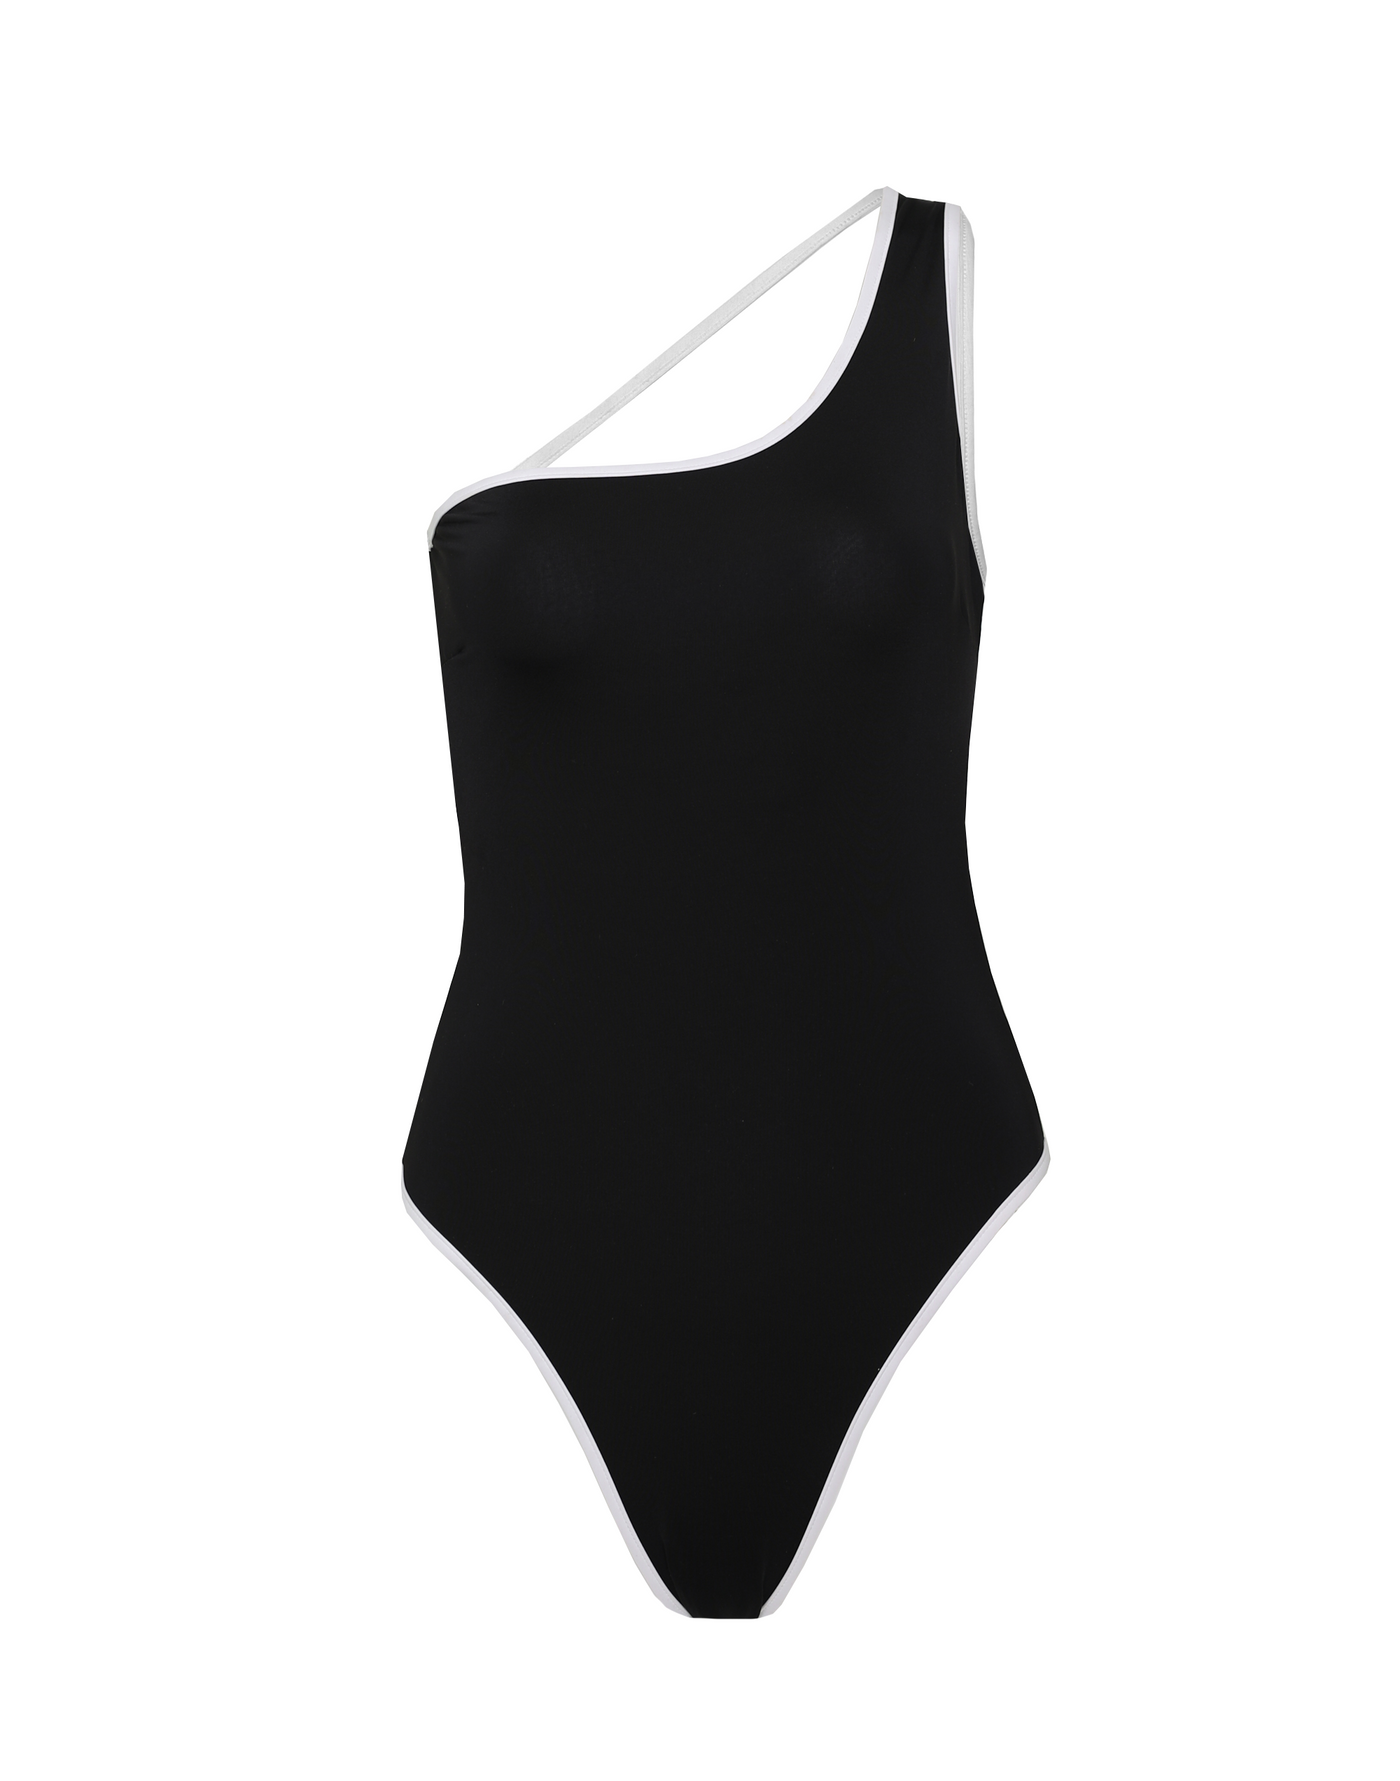 Portside One Piece (Black/White) - Reversible One Shoulder Swim Suit - Women's Swim - Charcoal Clothing